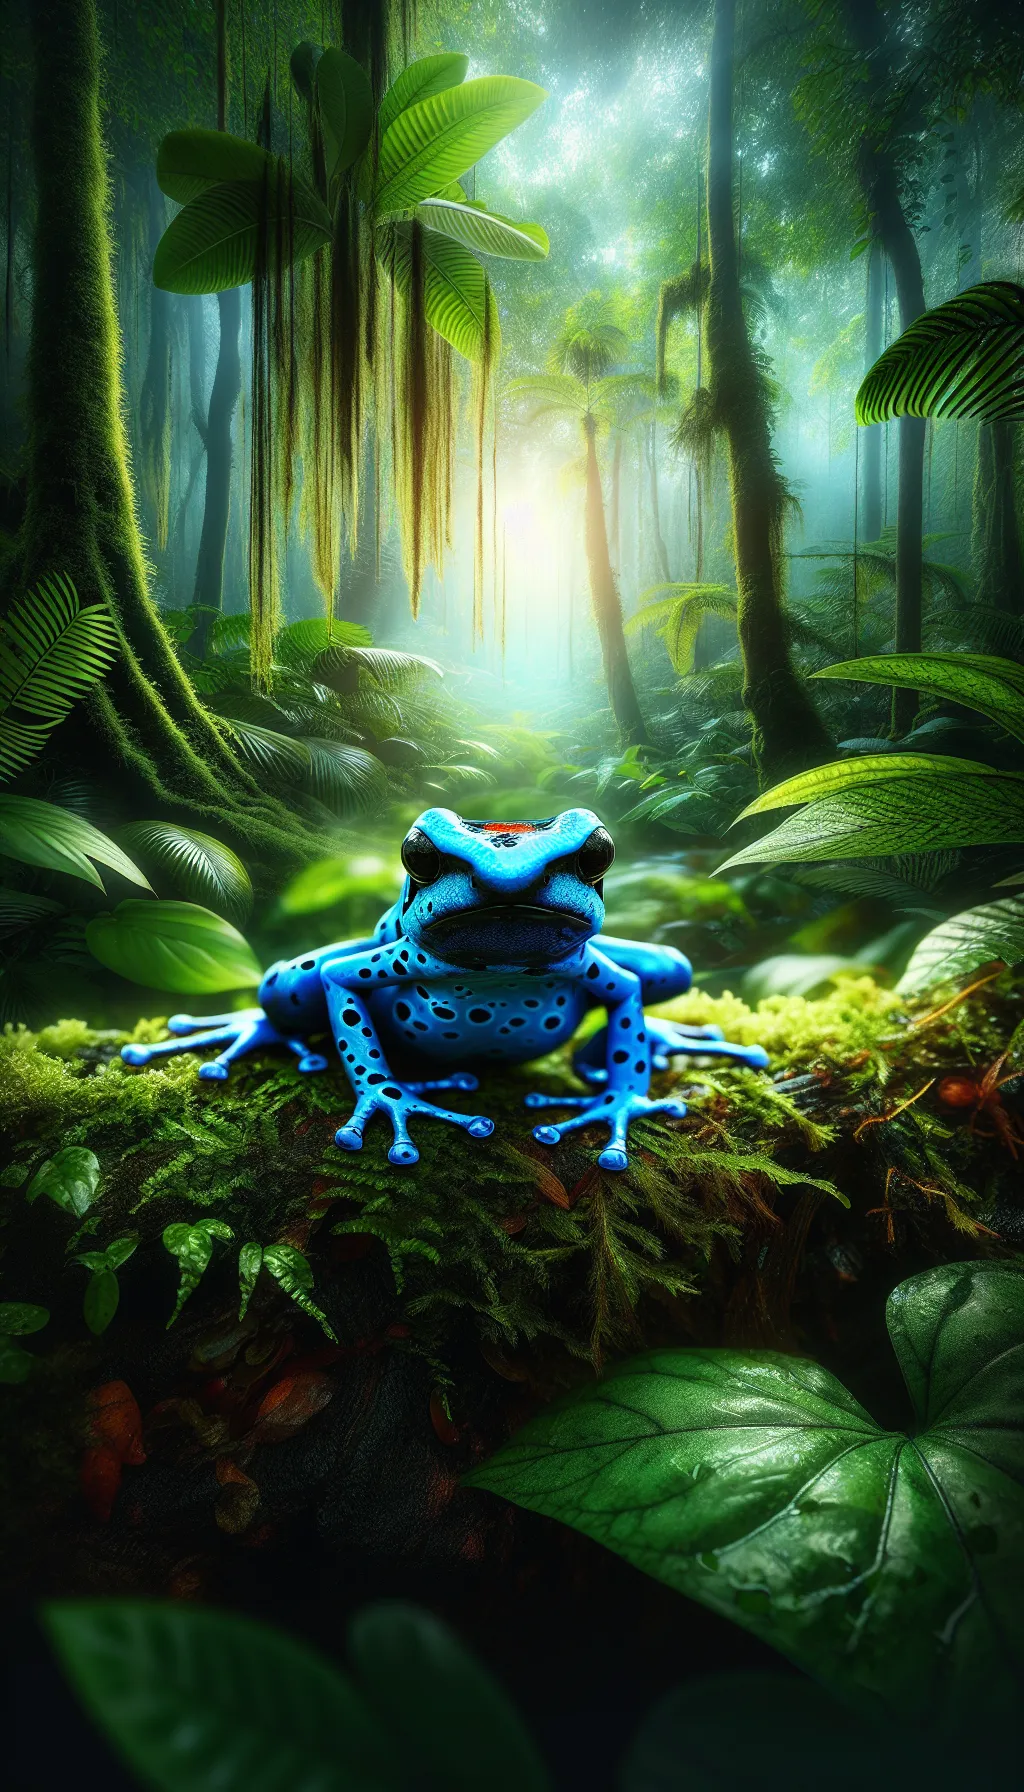 Blue Poison Dart Frog - Animal Matchup